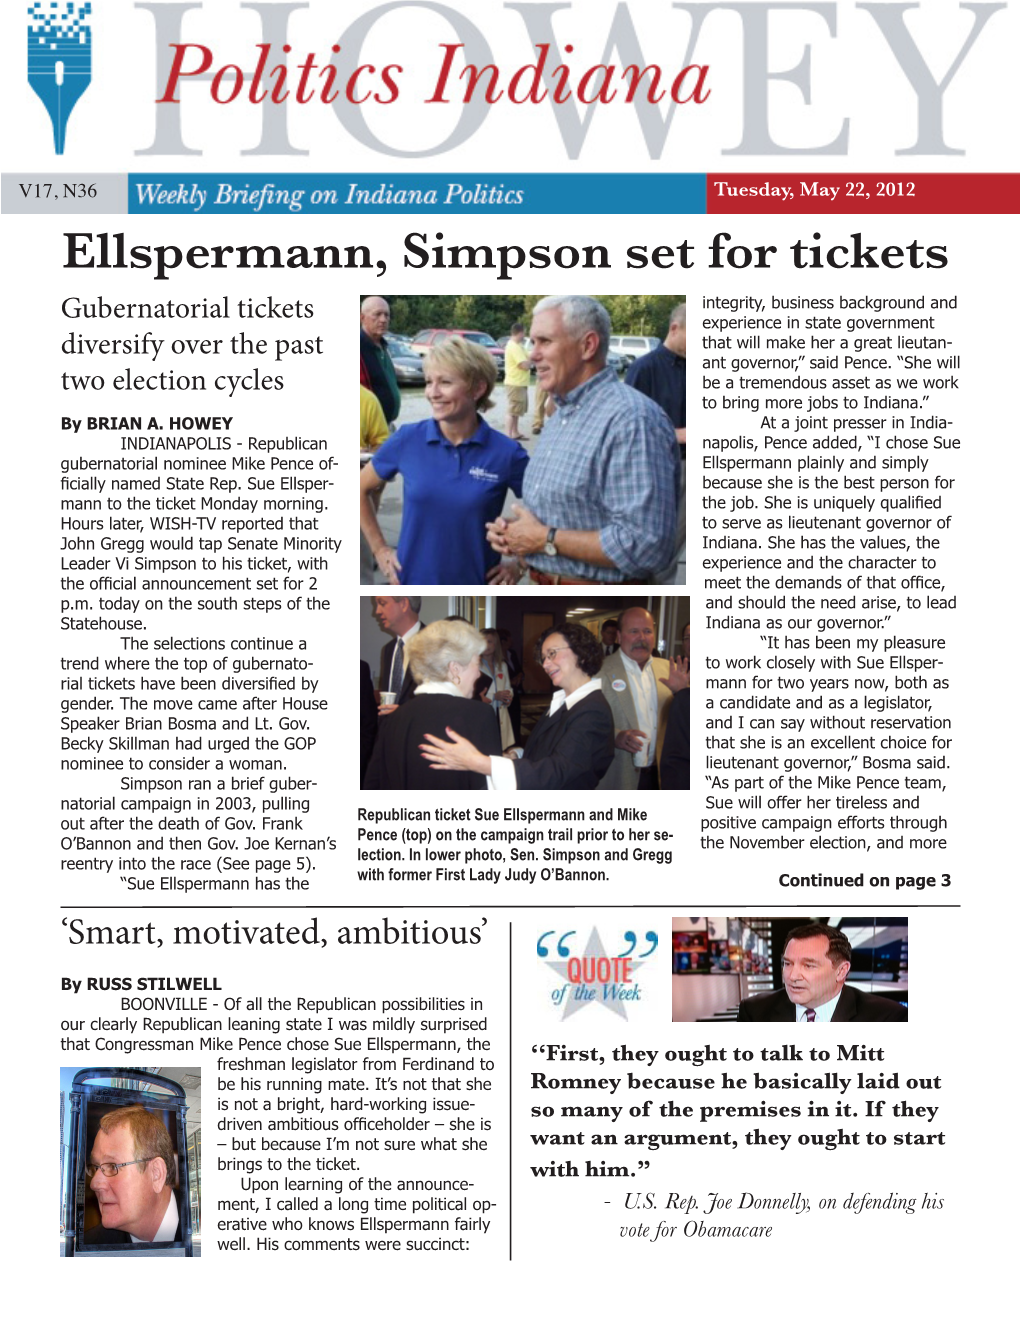 Ellspermann, Simpson Set for Tickets